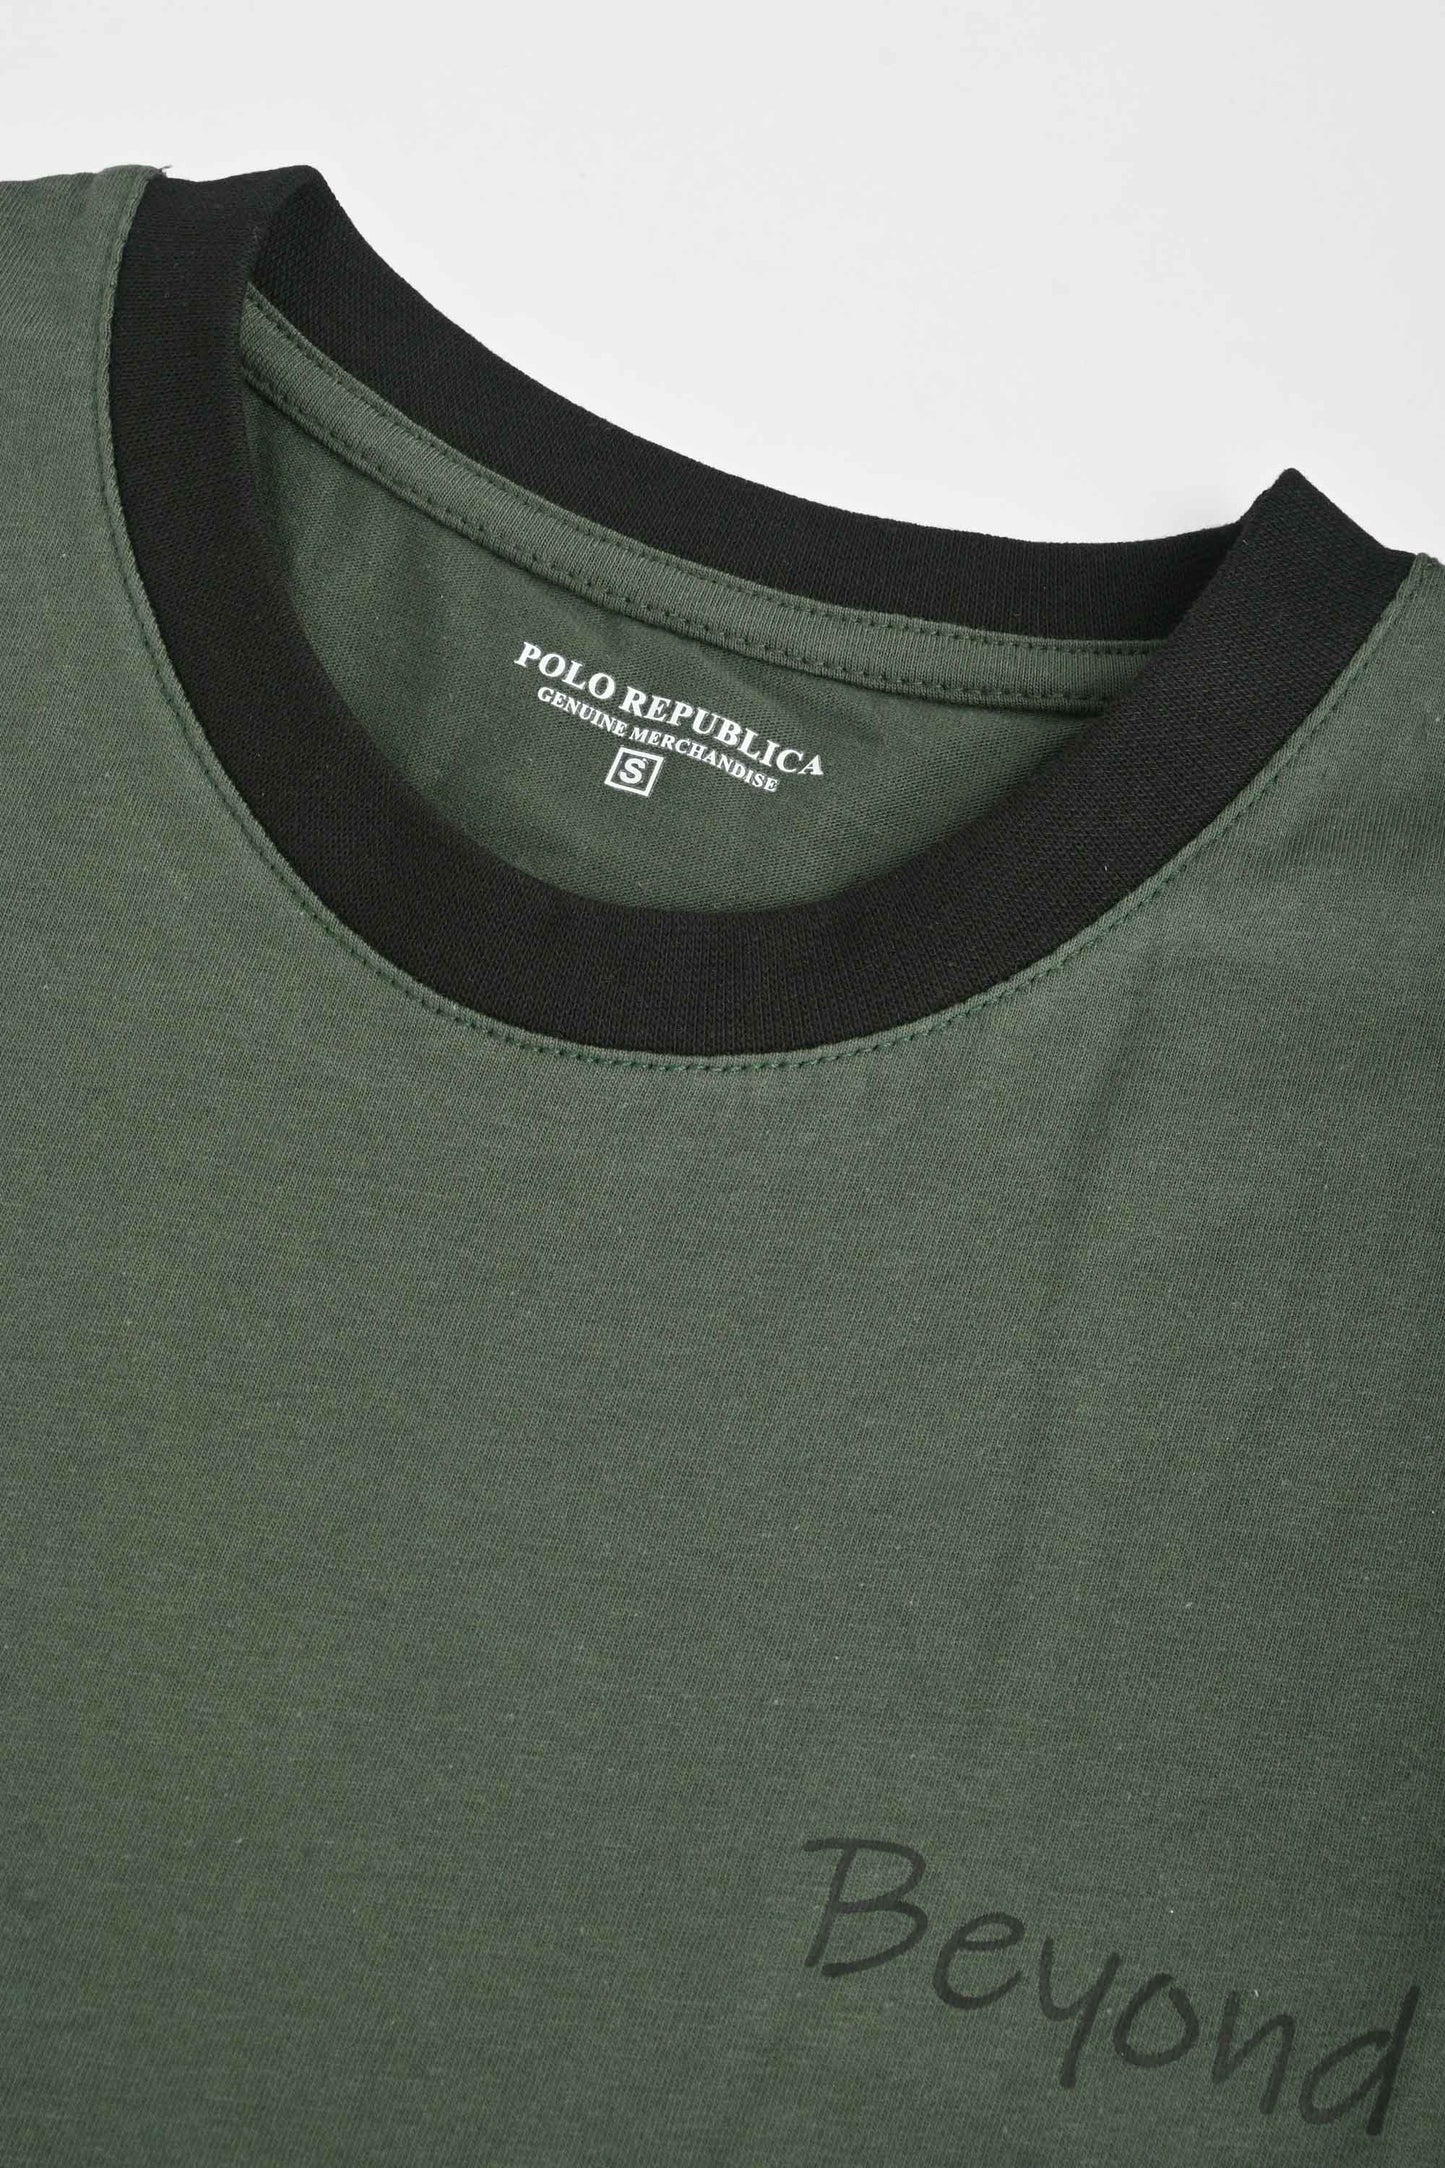 Polo Republica Beyond Circumstances Men's T-Shirt - CEO Collection Dark Green & Black